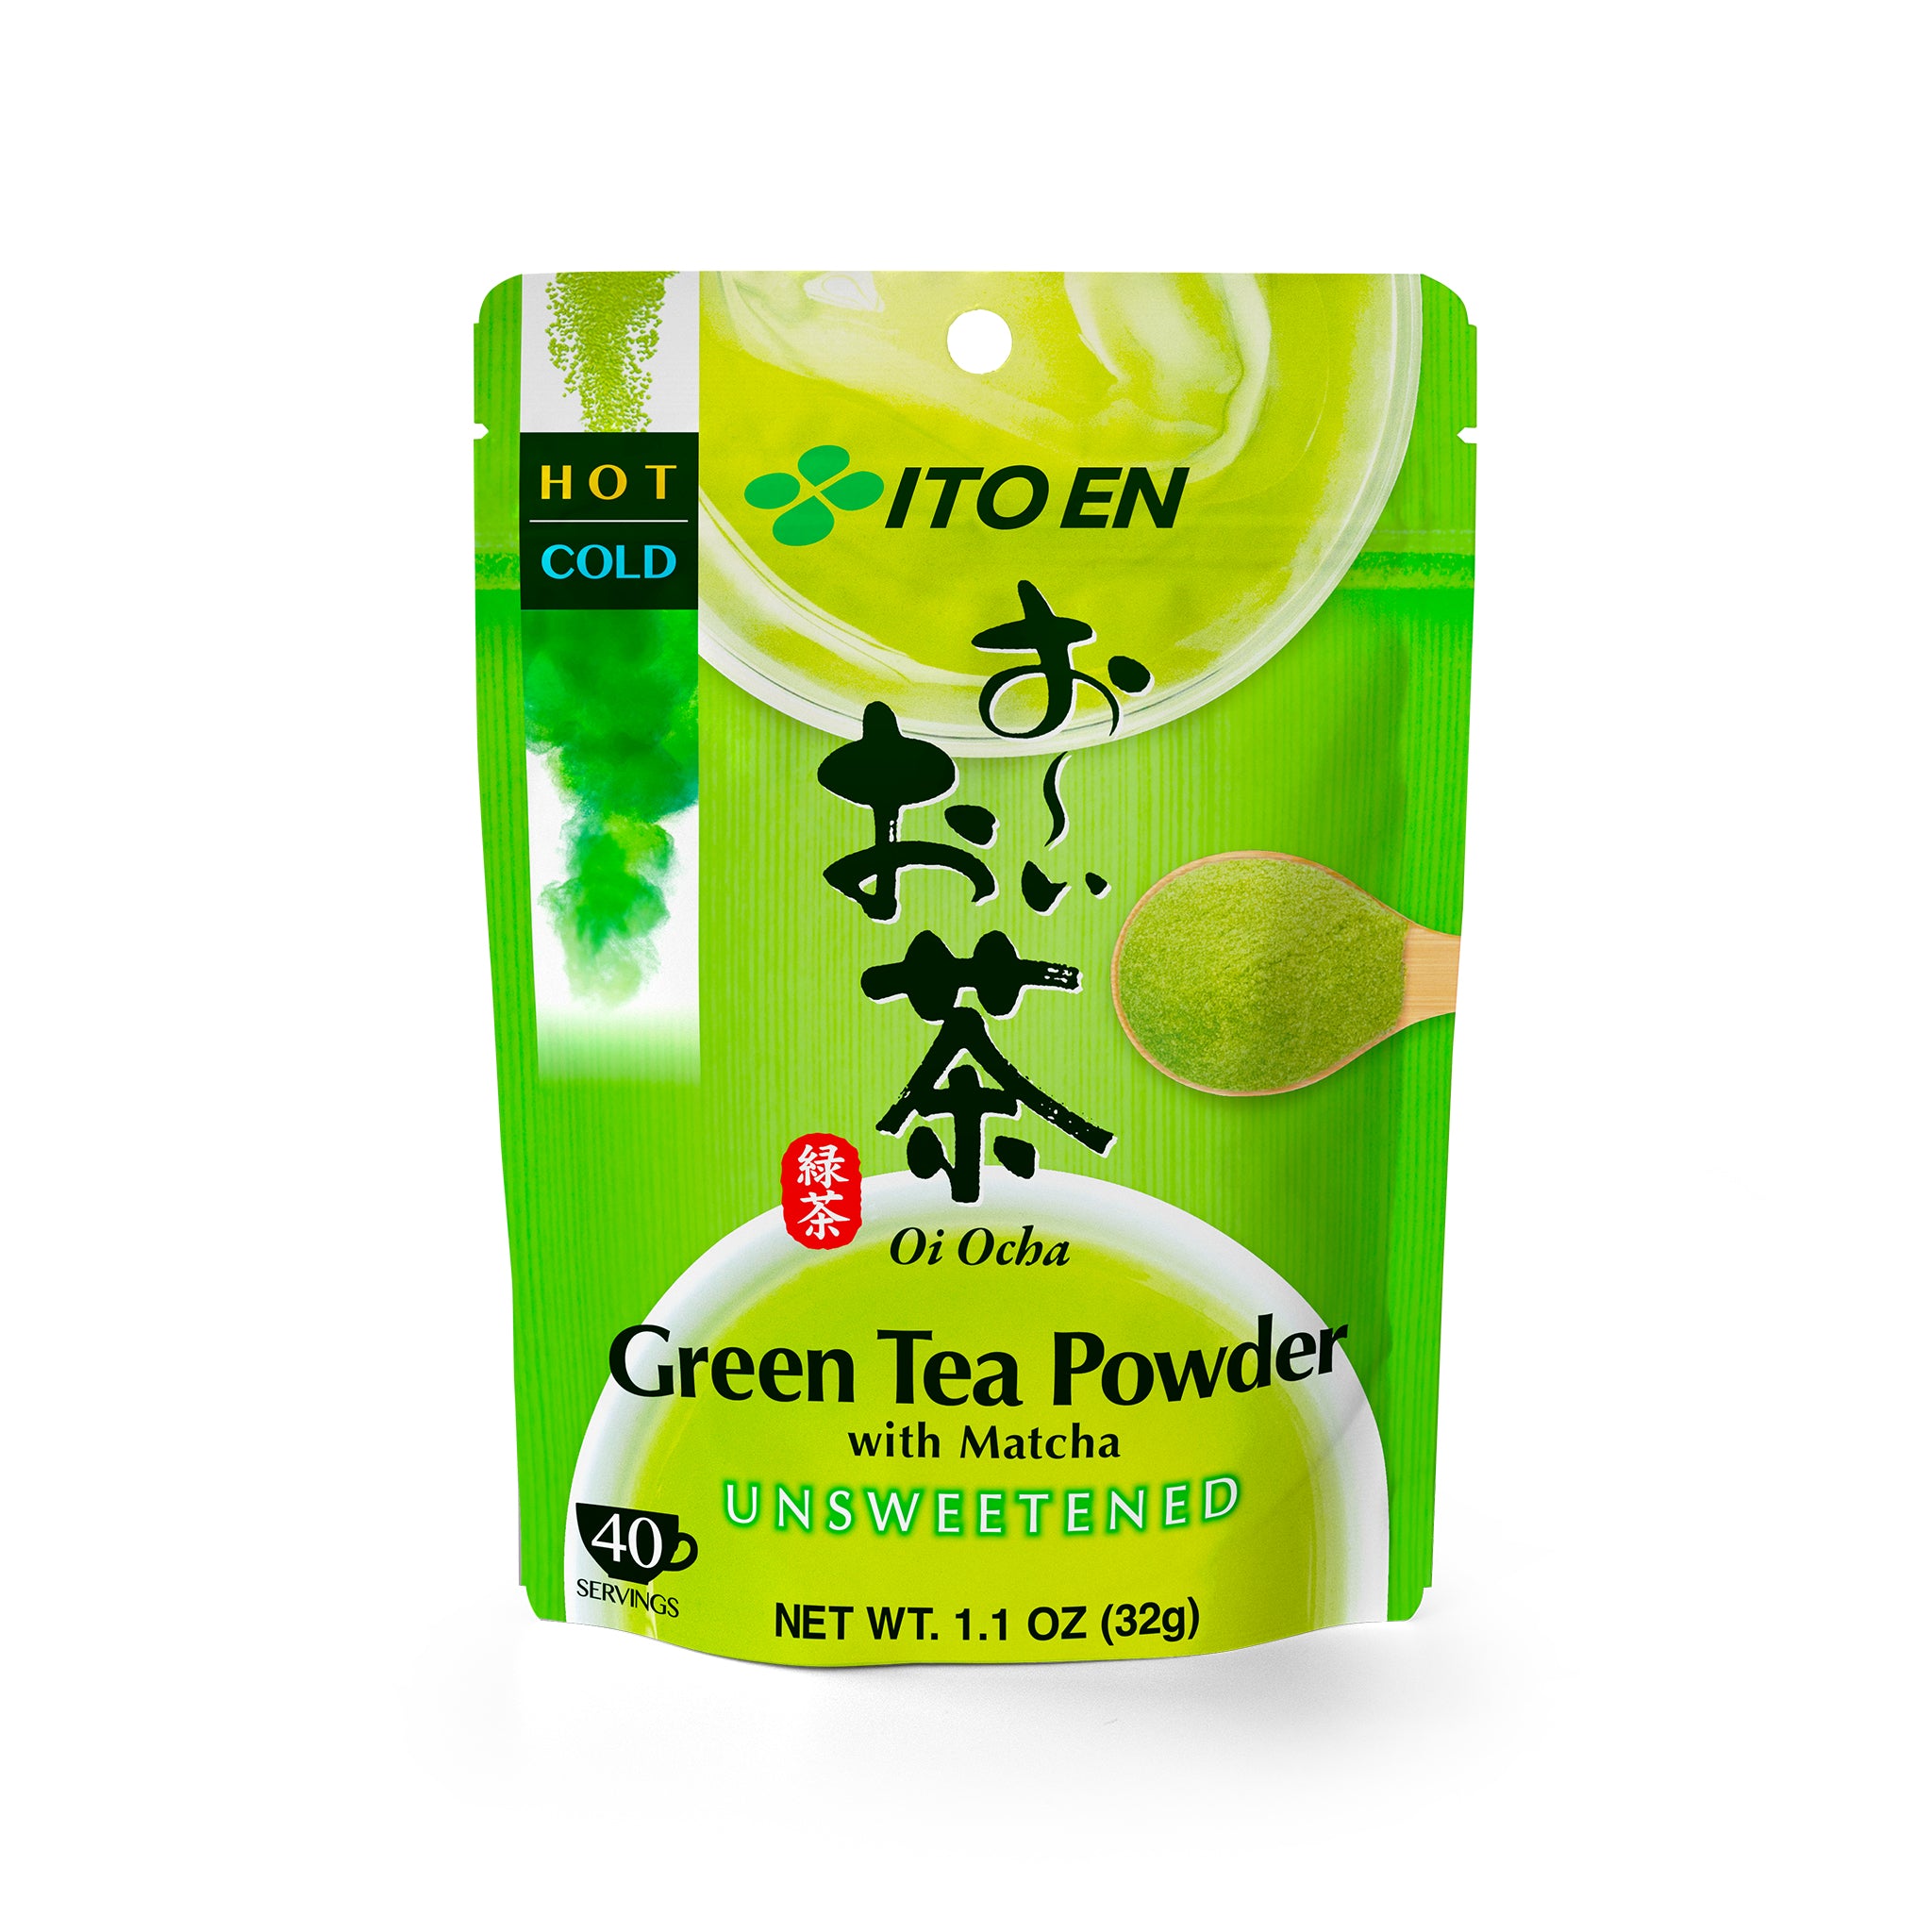 Green Tea Powder with Matcha